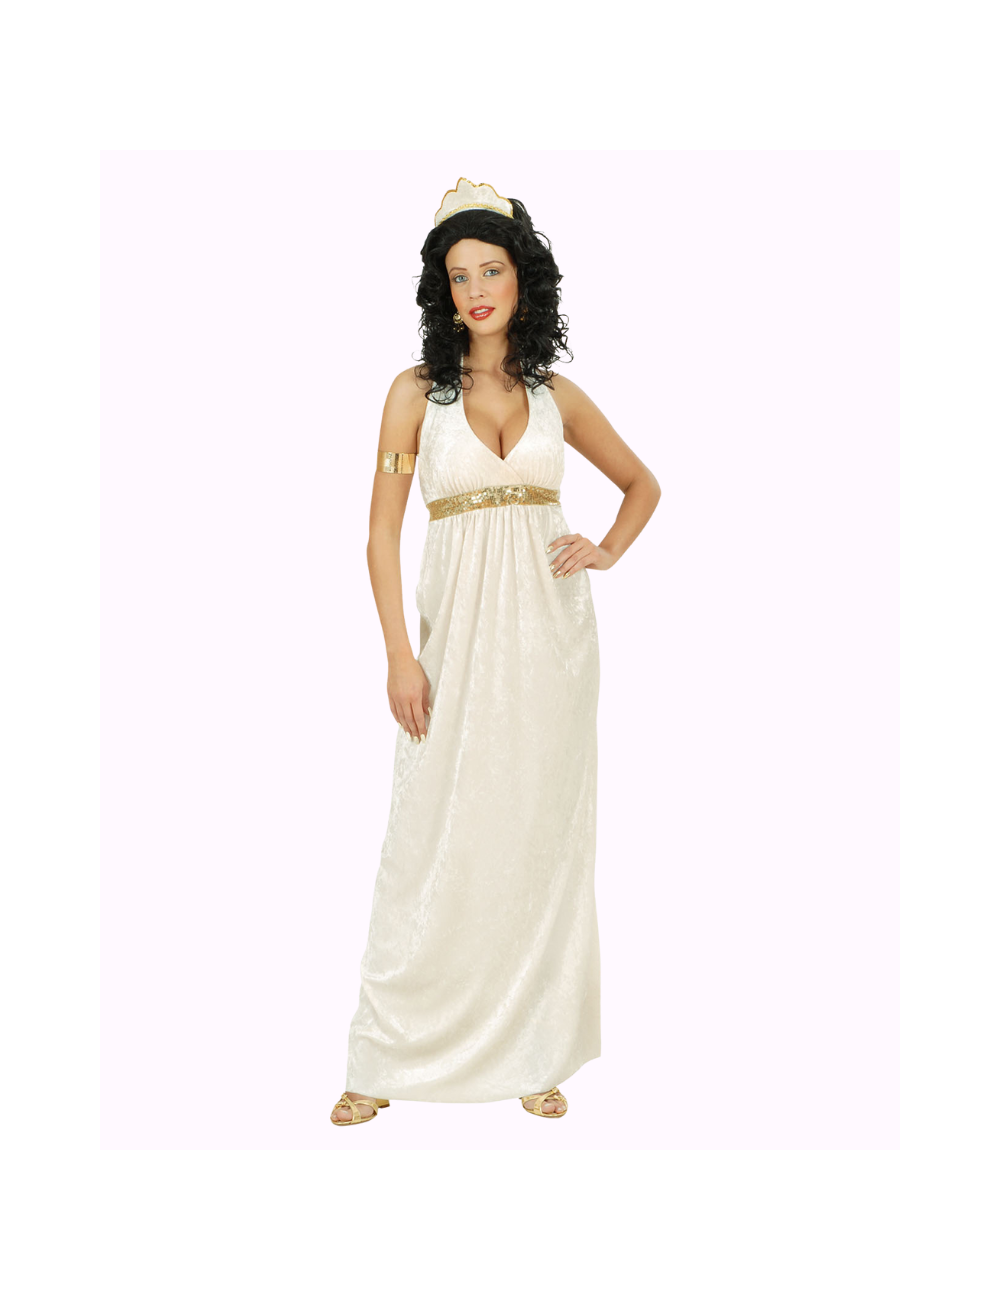 Antique Greek Woman Costume